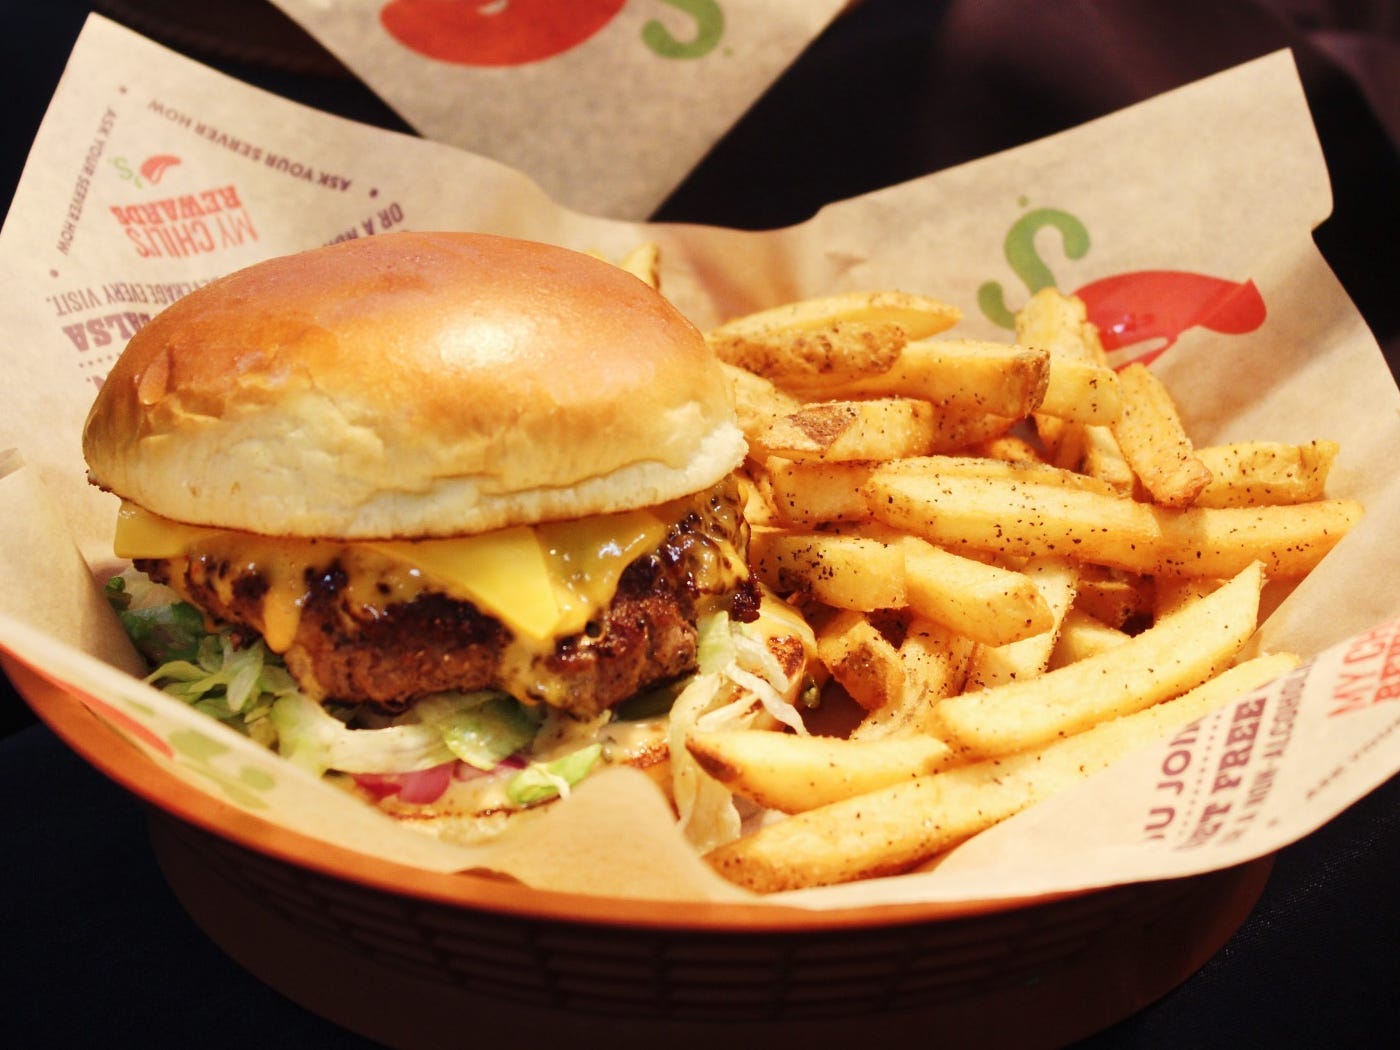 UNTER EMBARGO: Chili's Big Smasher Burger